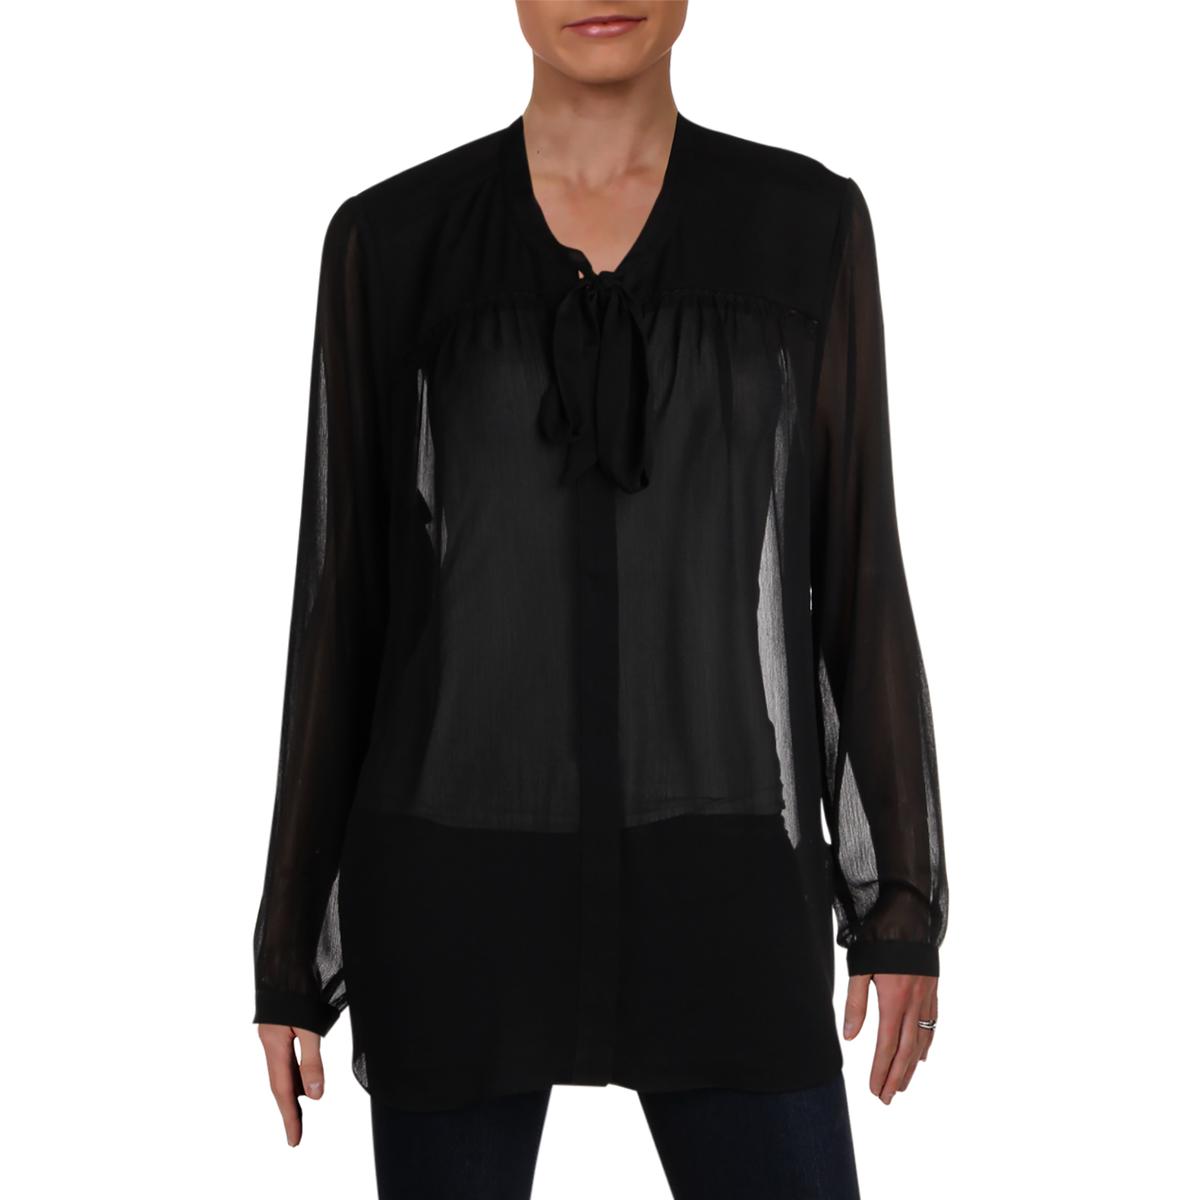 NYDJ Womens Black Printed Sheer Tie Neck Blouse Top L BHFO 3756 | eBay